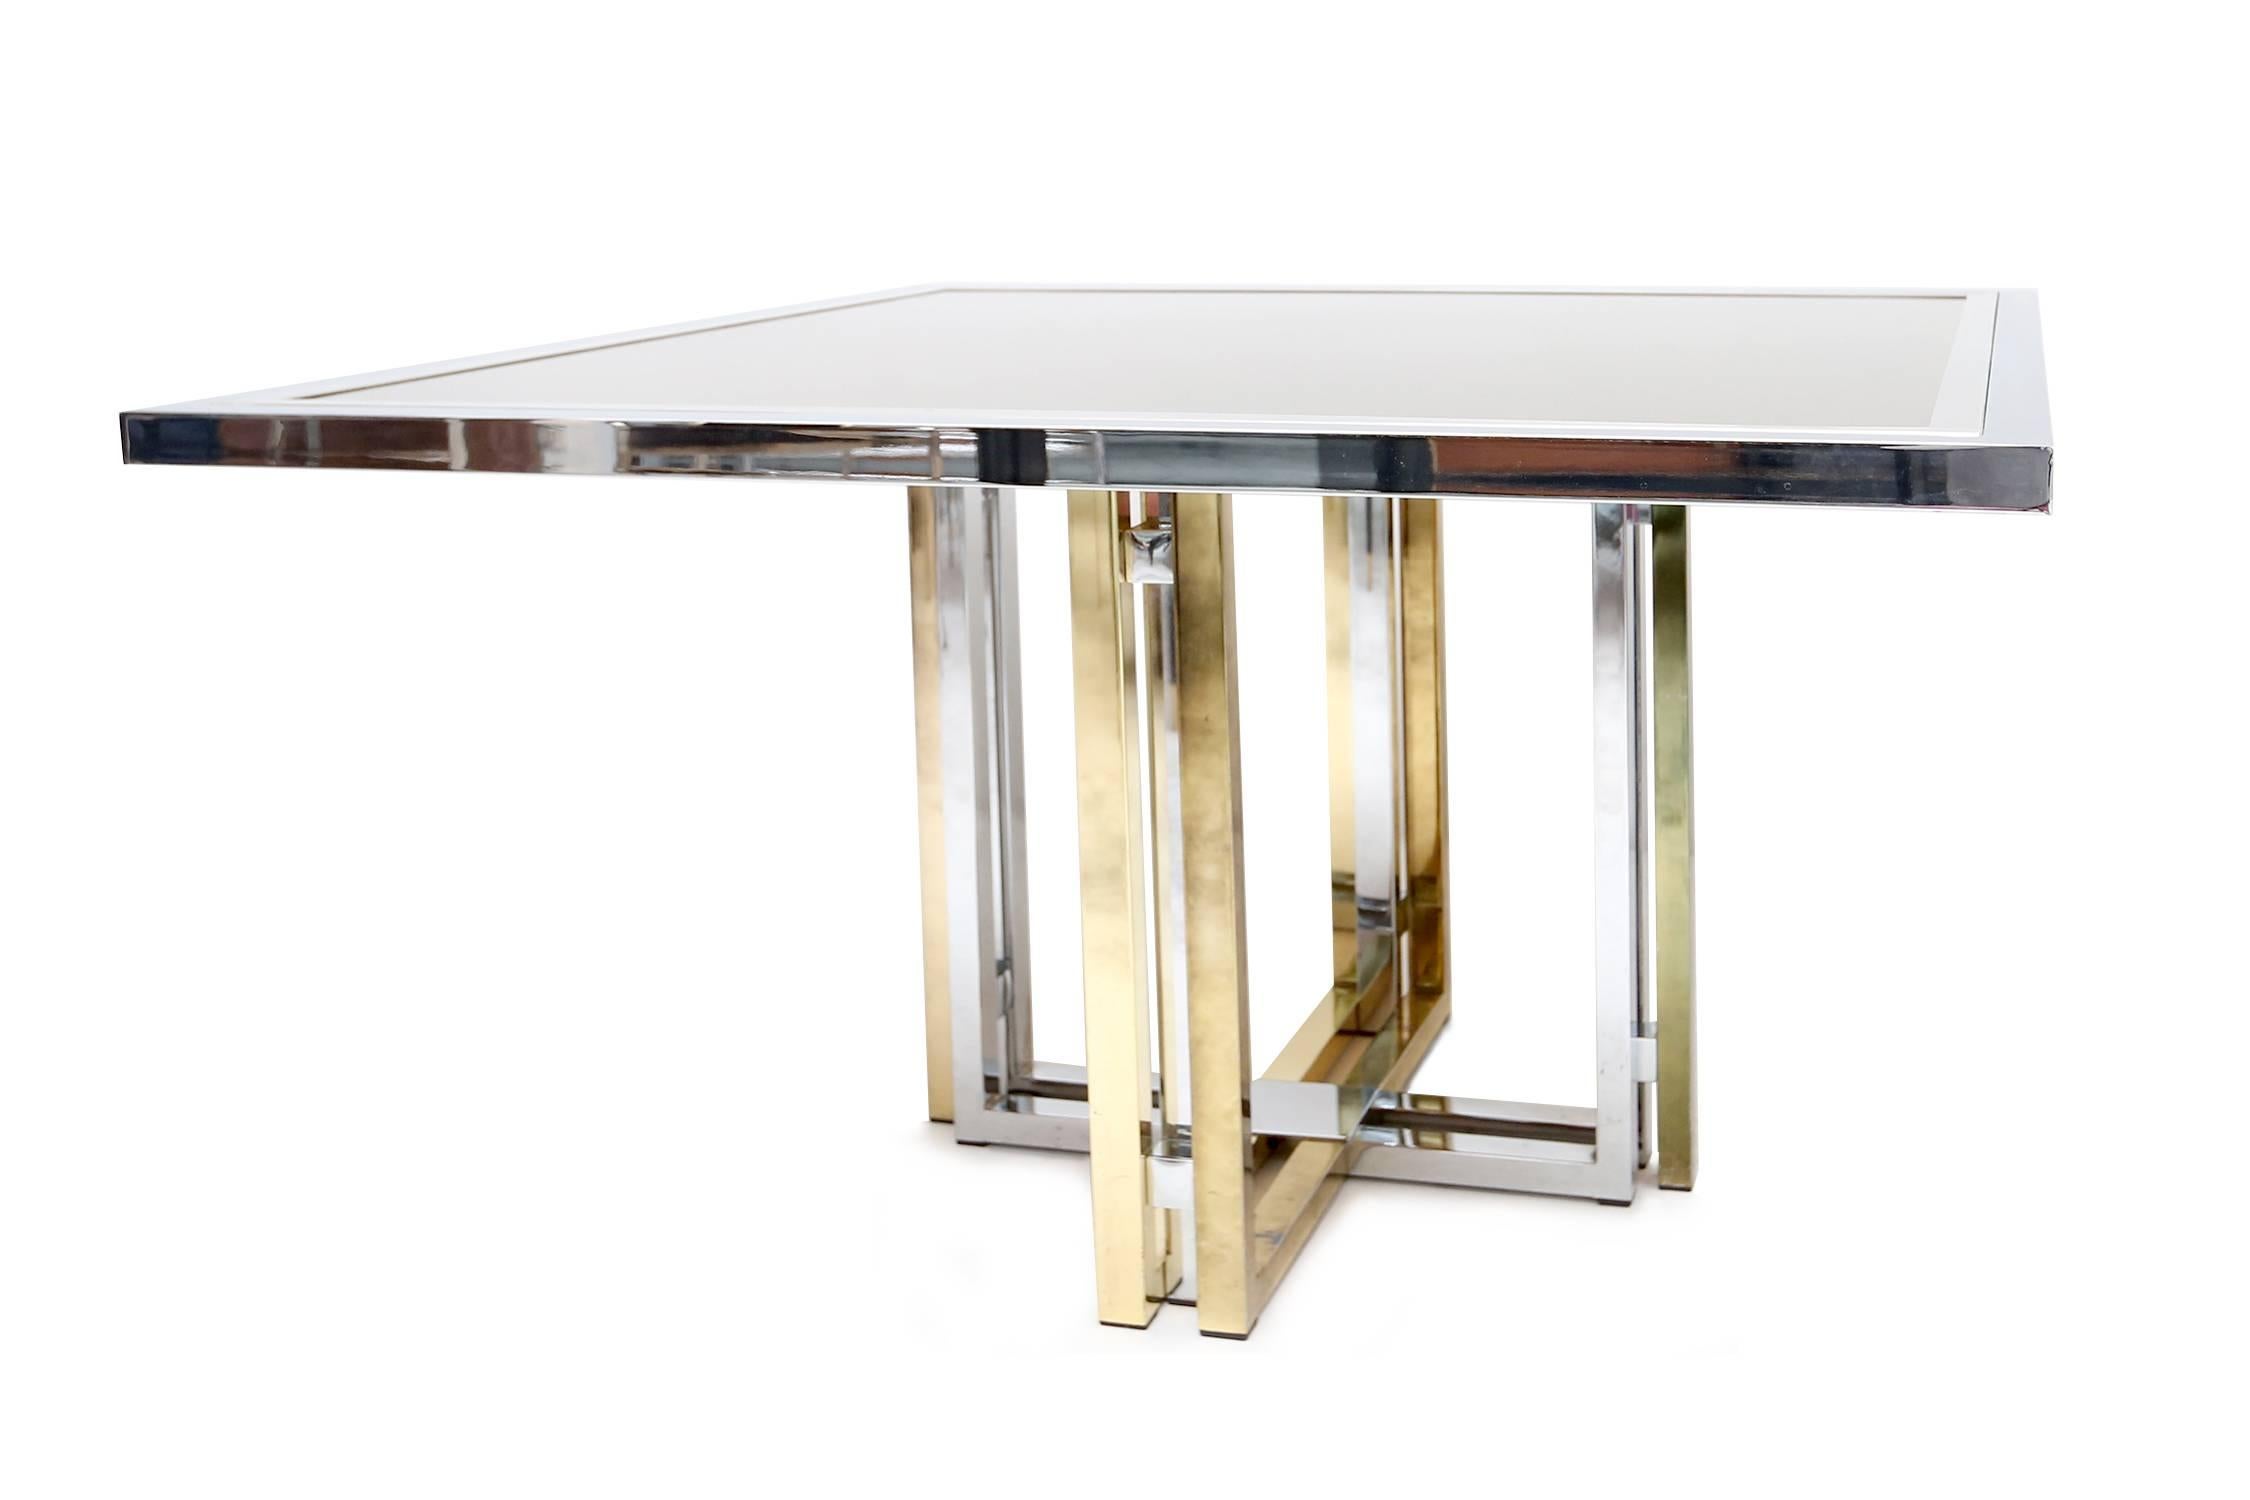 1970s Dining Table | Brass | Chrome
Bronze mirrored Glass top
Belgochrom | attr to Maison Jansen
130 cm x 130 cm x 74 cm
